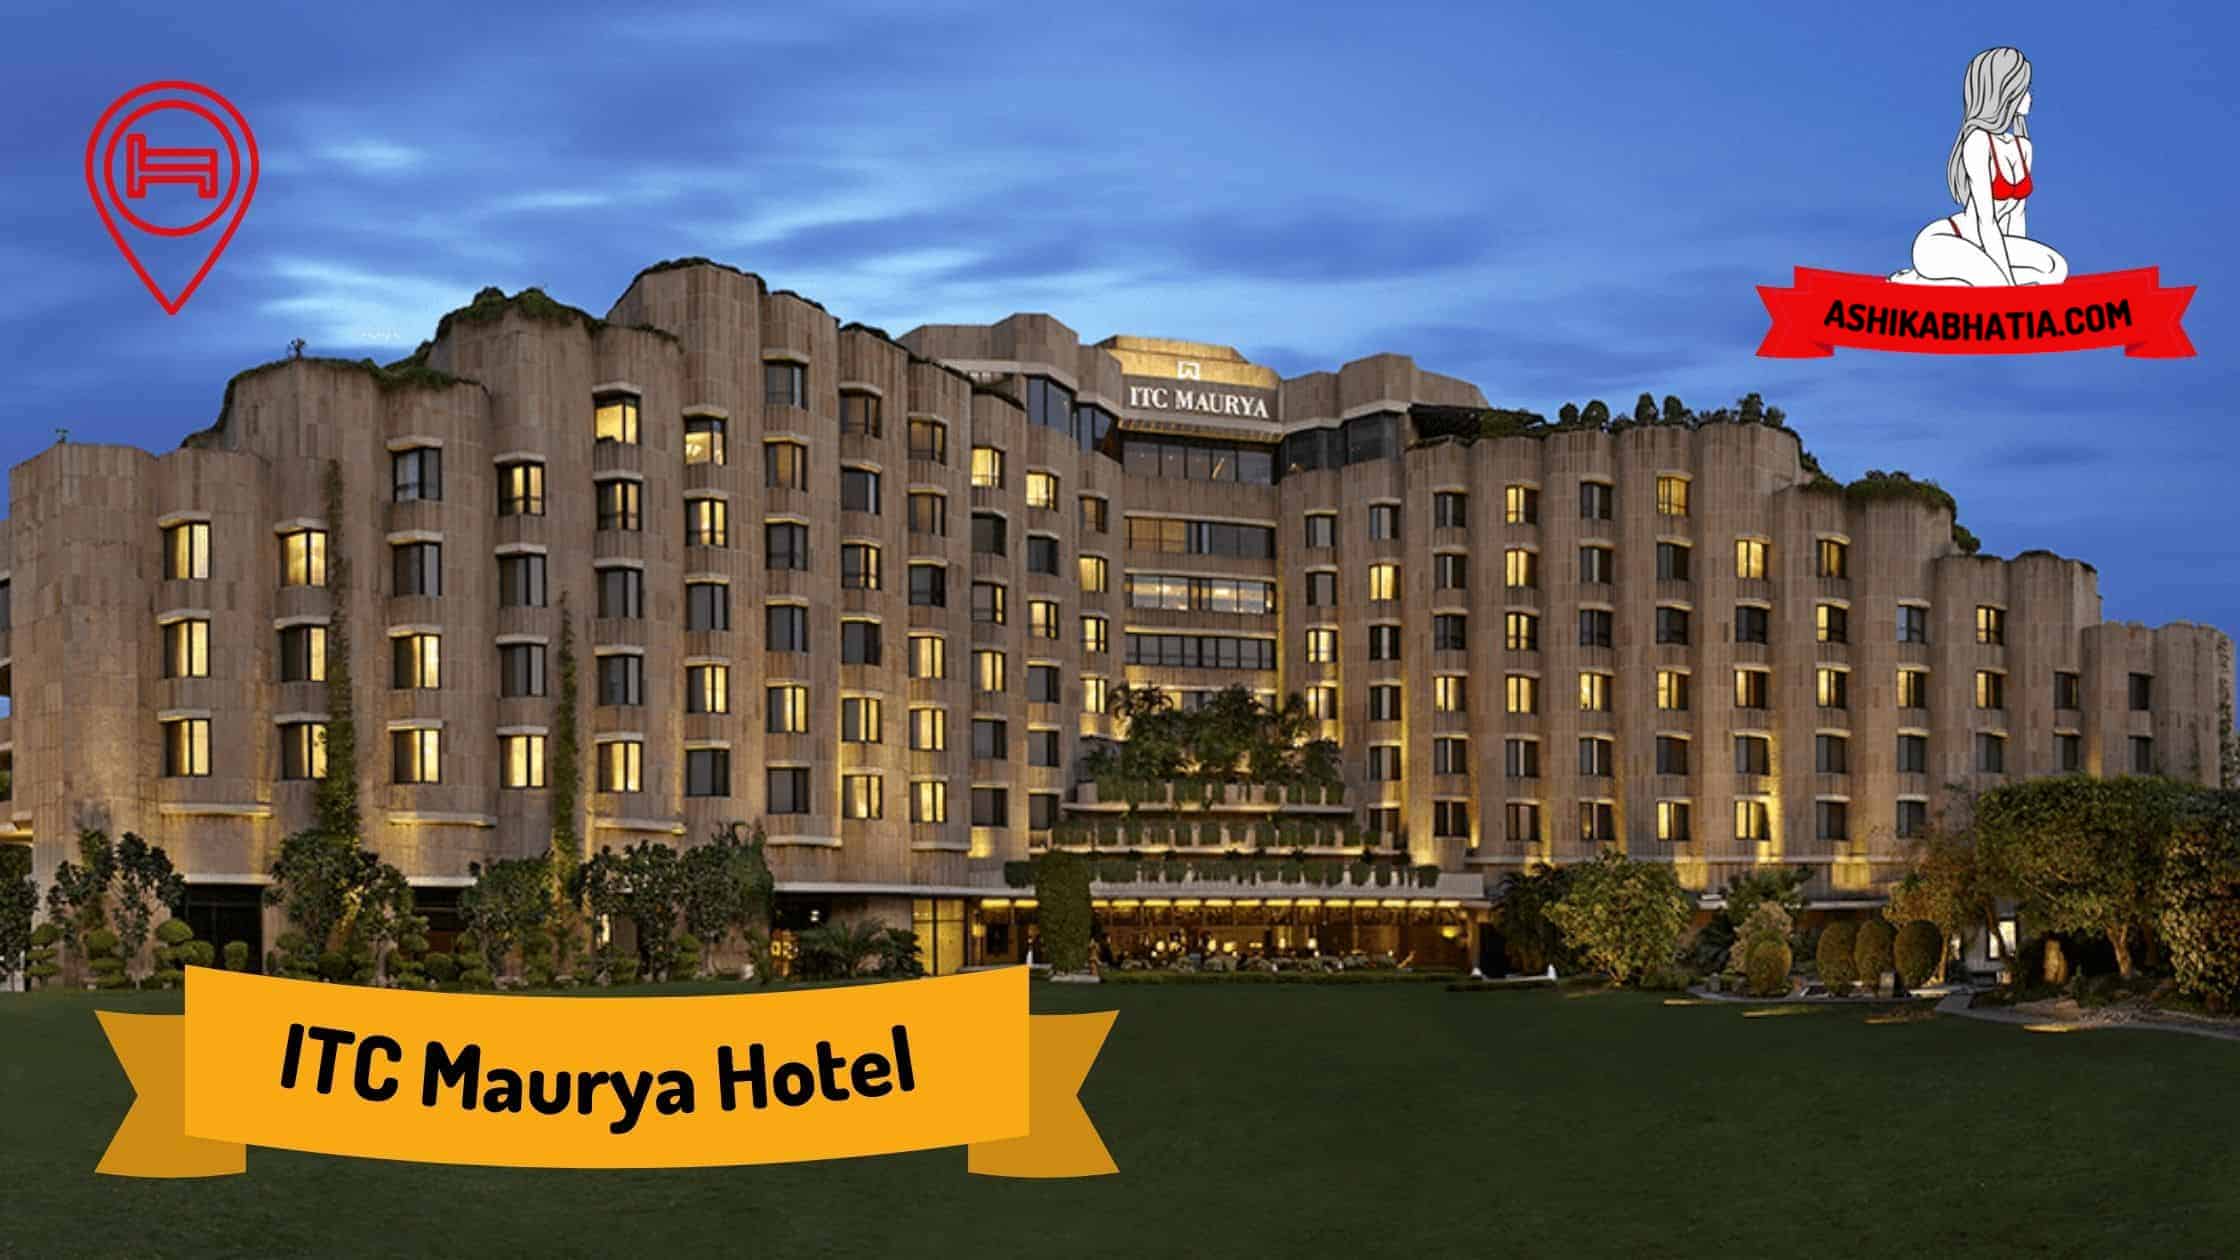 ITC Maurya Hotel Escorts